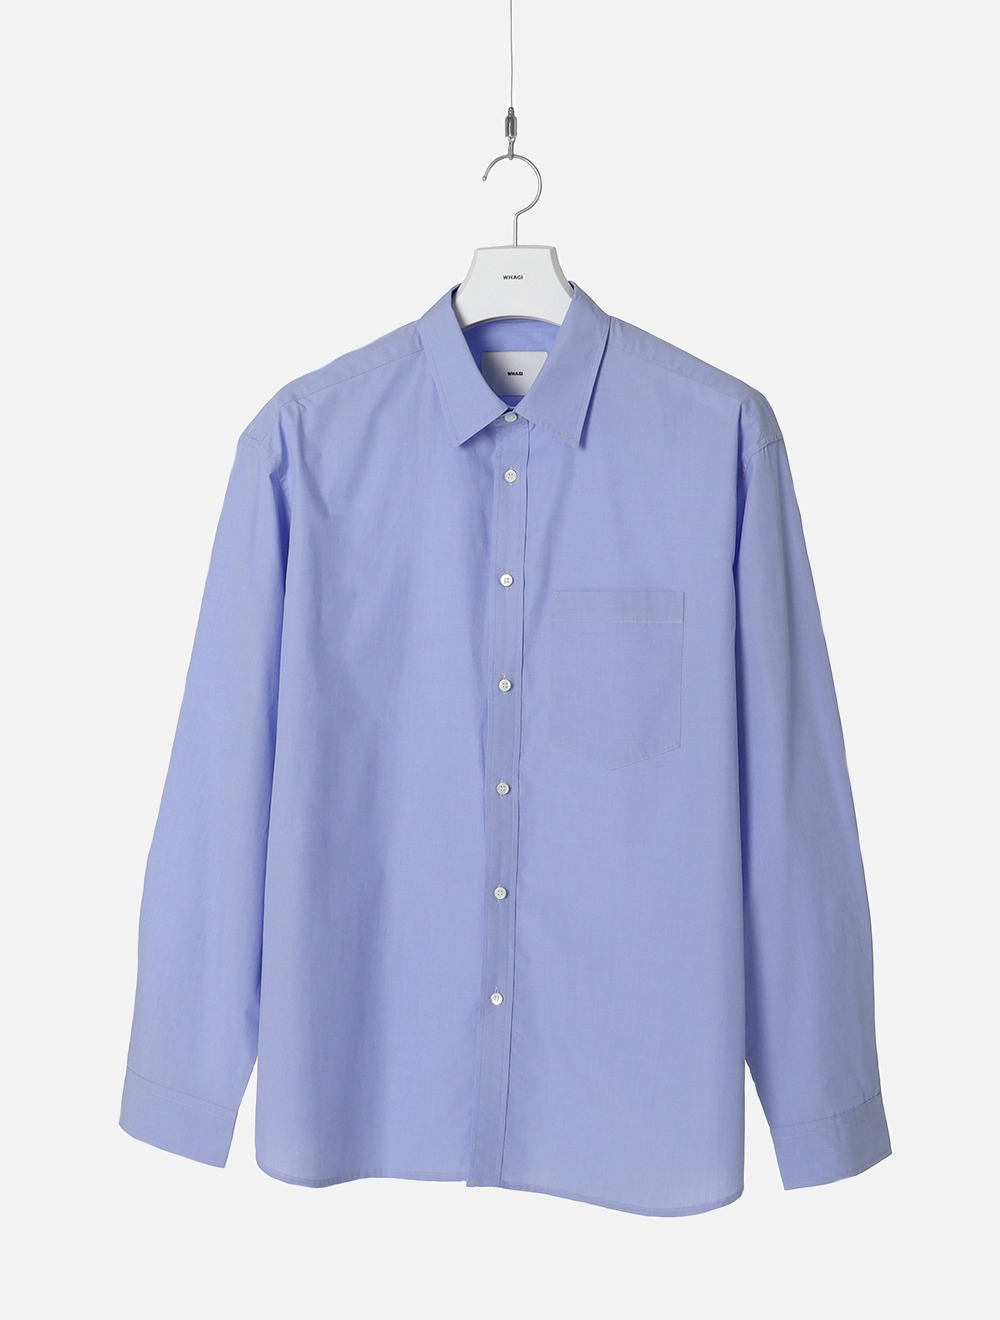 Architect Shirt (Sax Blue)